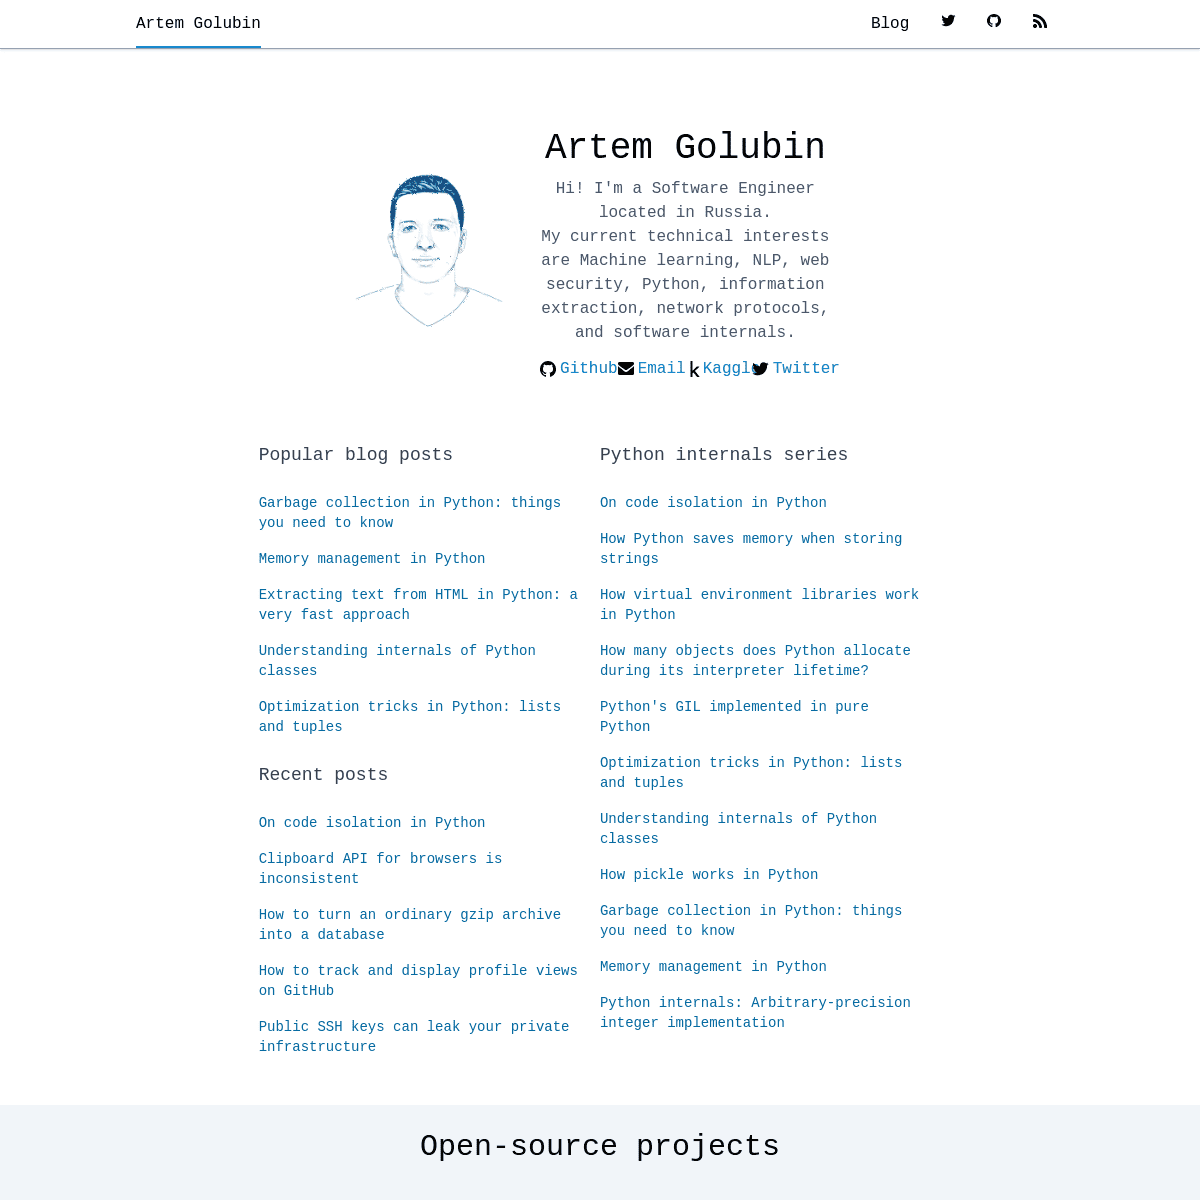 A complete backup of https://rushter.com